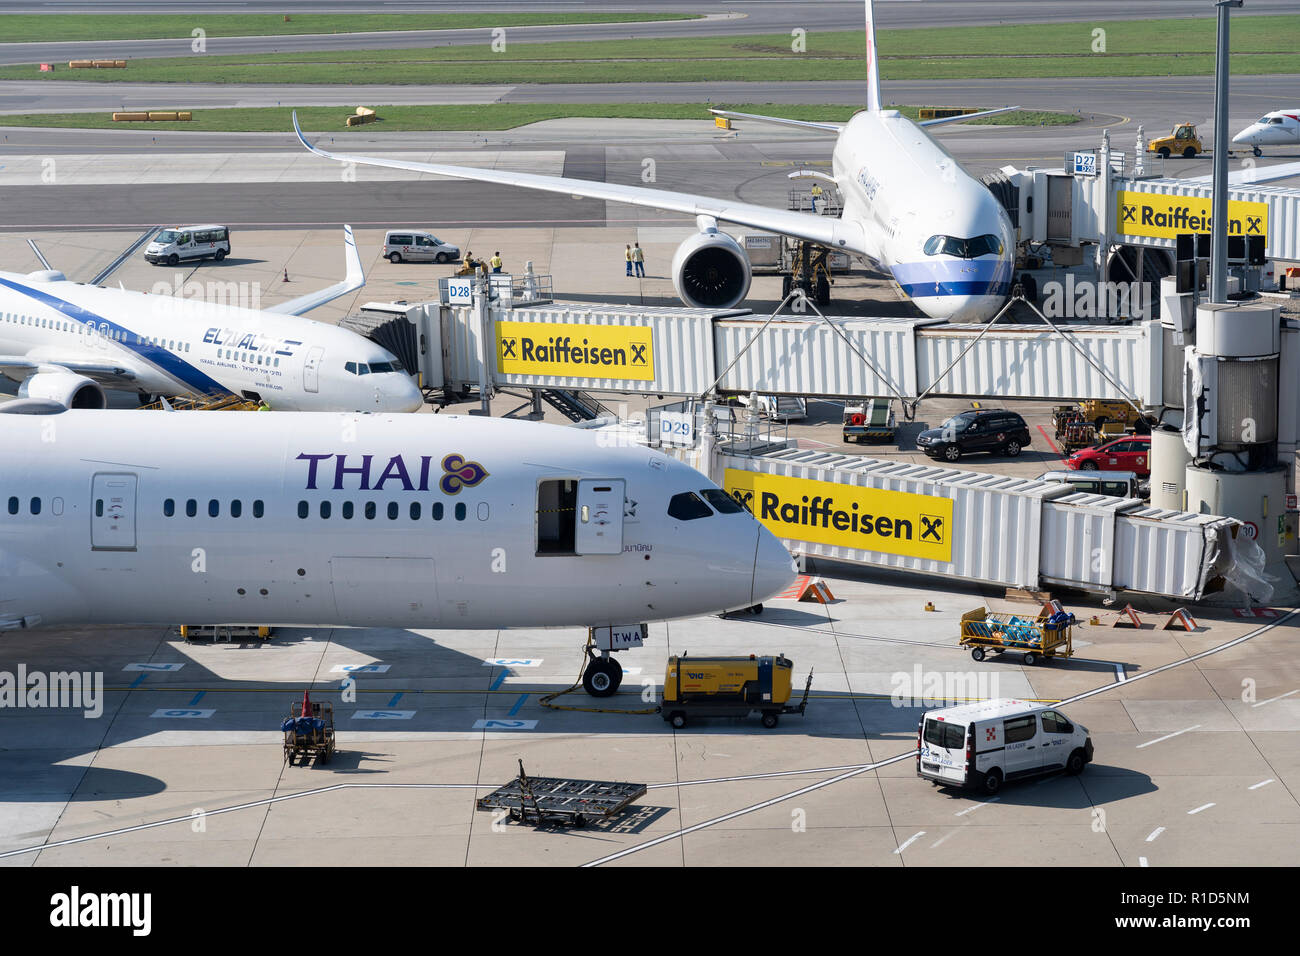 A Thai Airways passenger jet docked to a passenger bridge at Vienna Airport Stock Photo